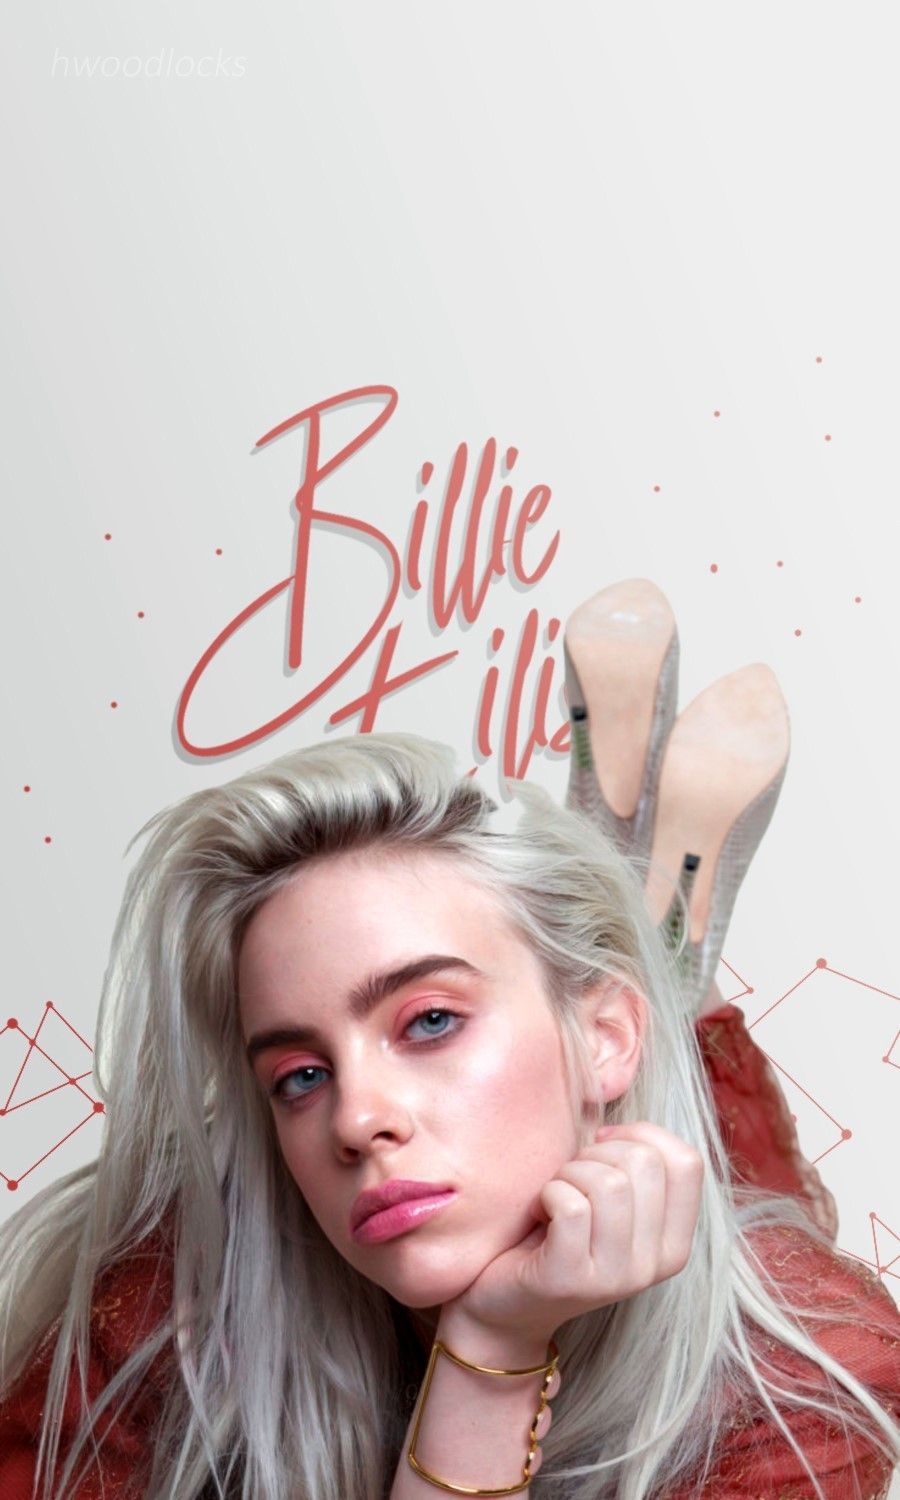 Billie Eilish Photoshoot Wallpapers